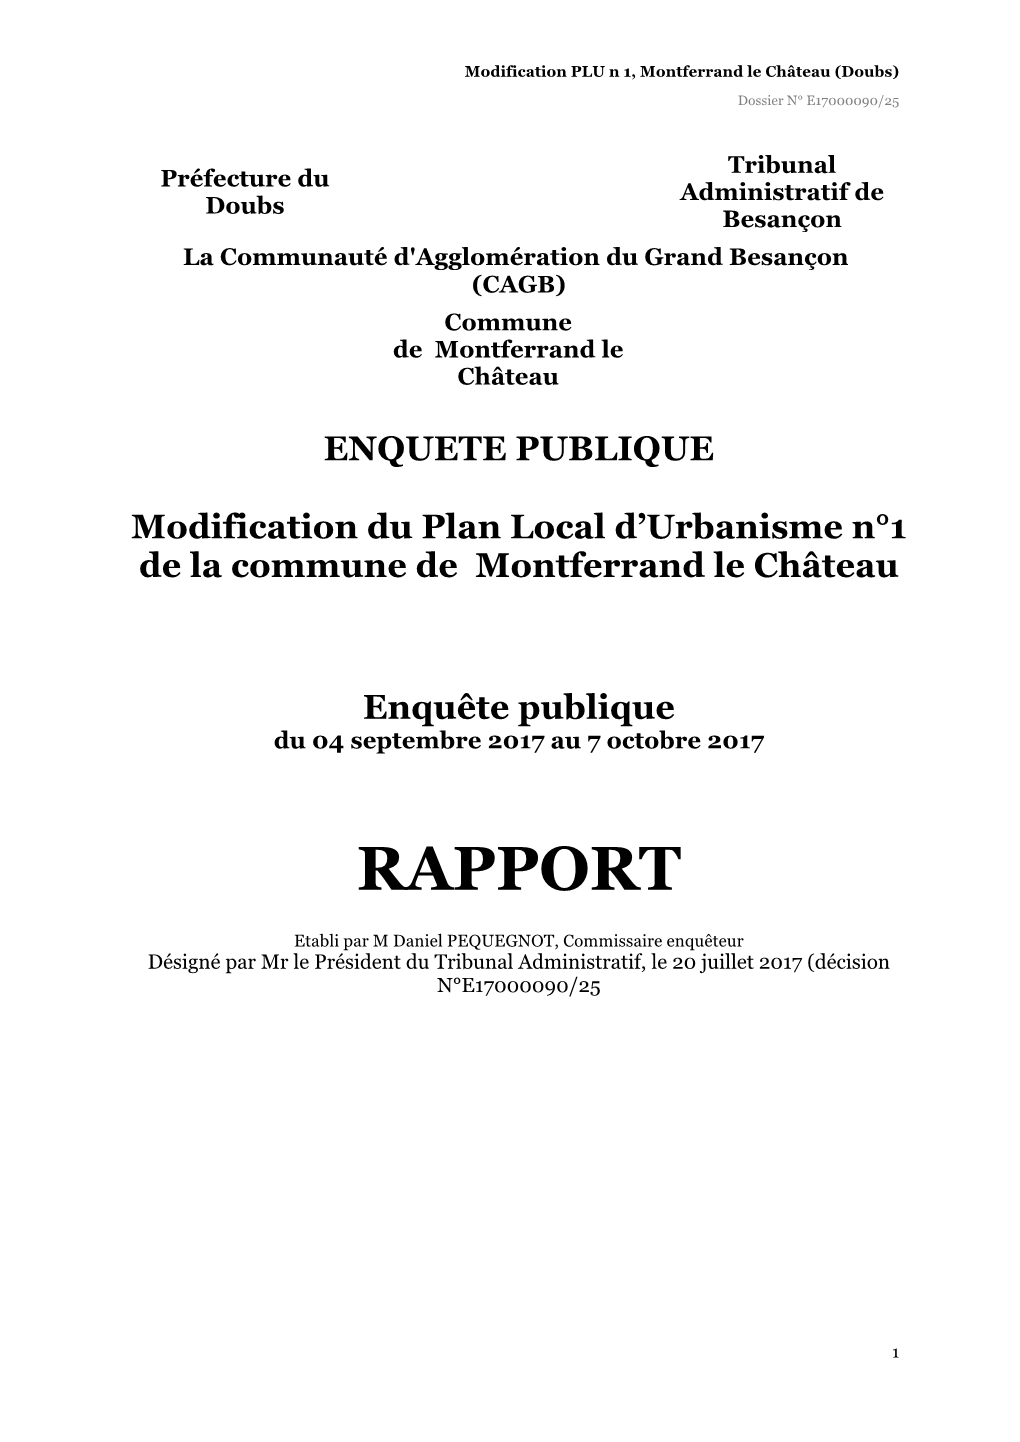 Rapport MONTFERRAND Le CHATEAU V 01-2